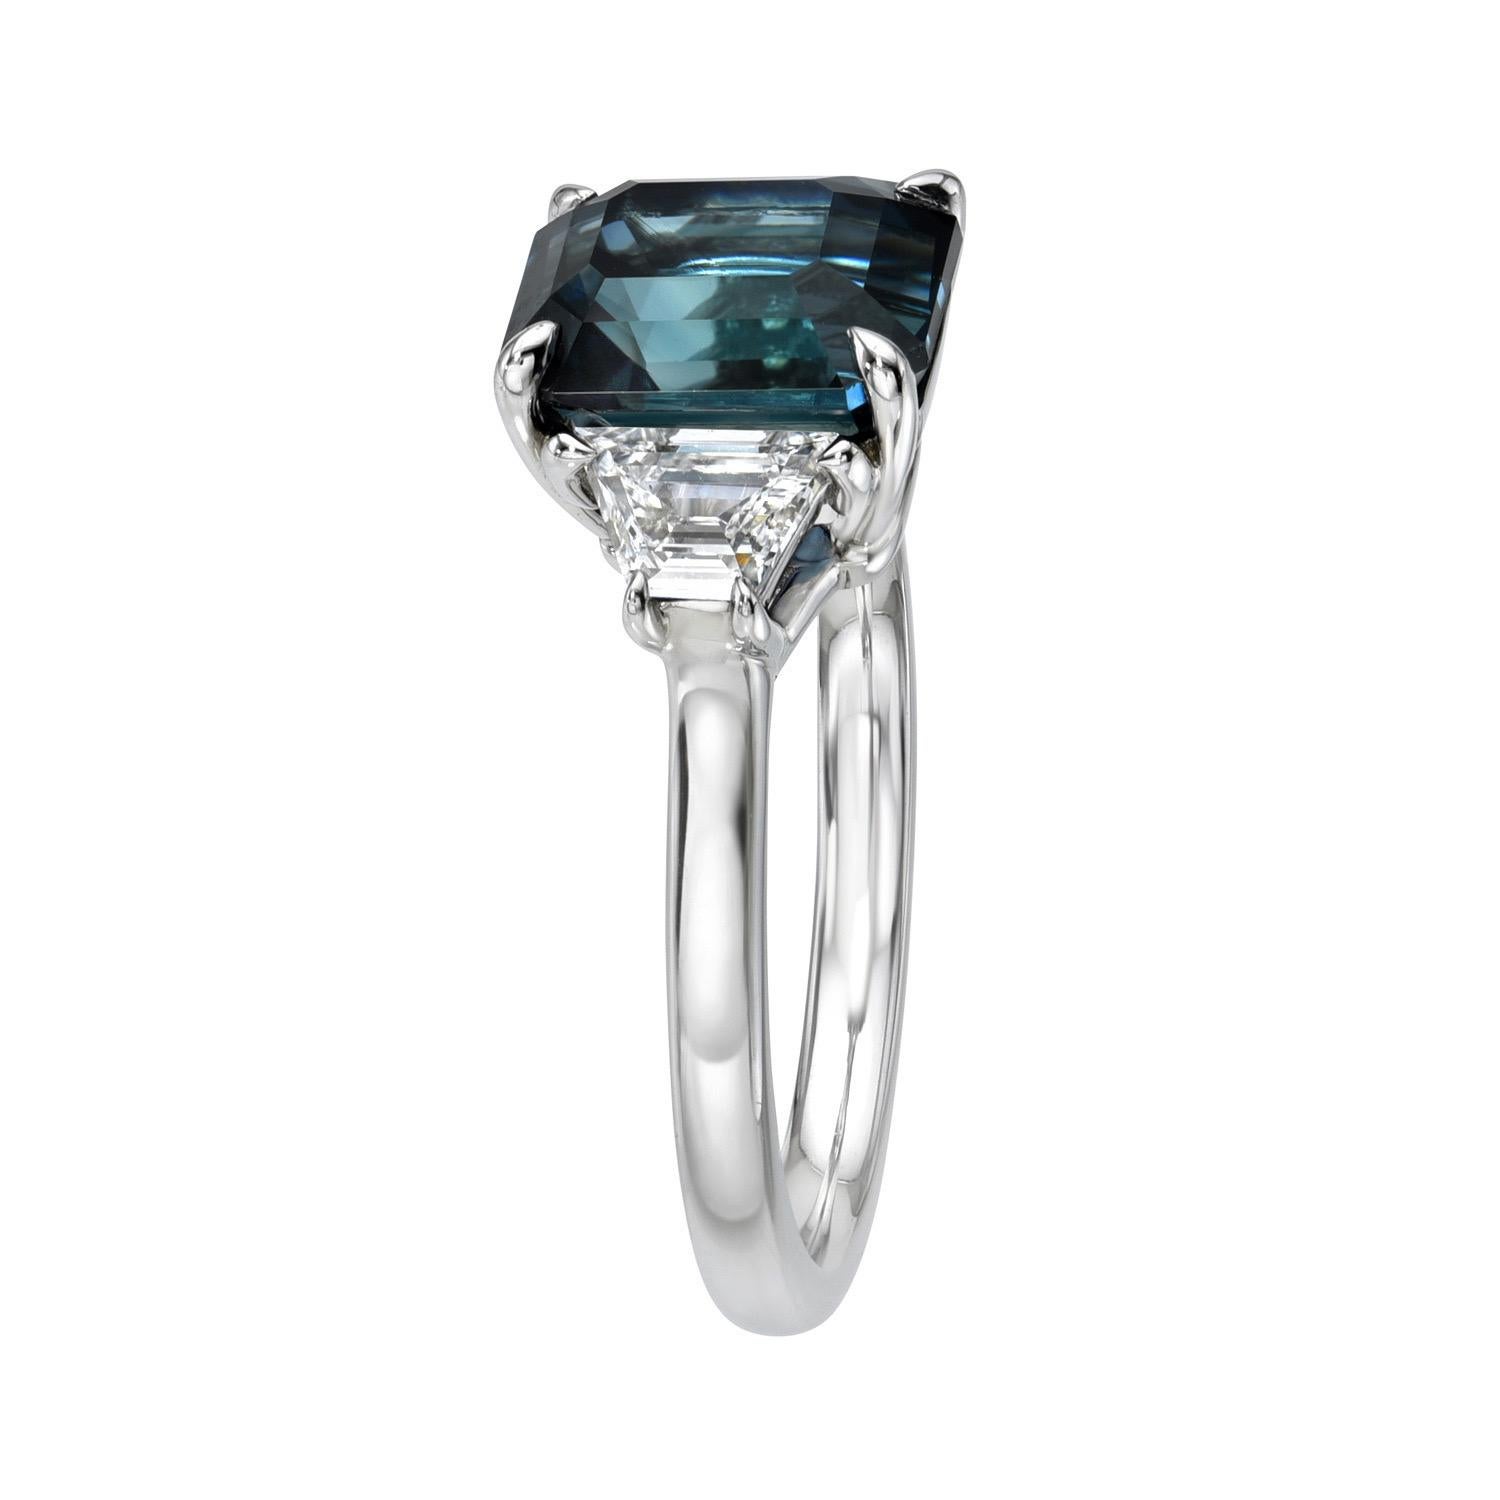 Women's Teal Blue Sapphire Ring 4.16 Carat Emerald Cut Sri Lanka For Sale